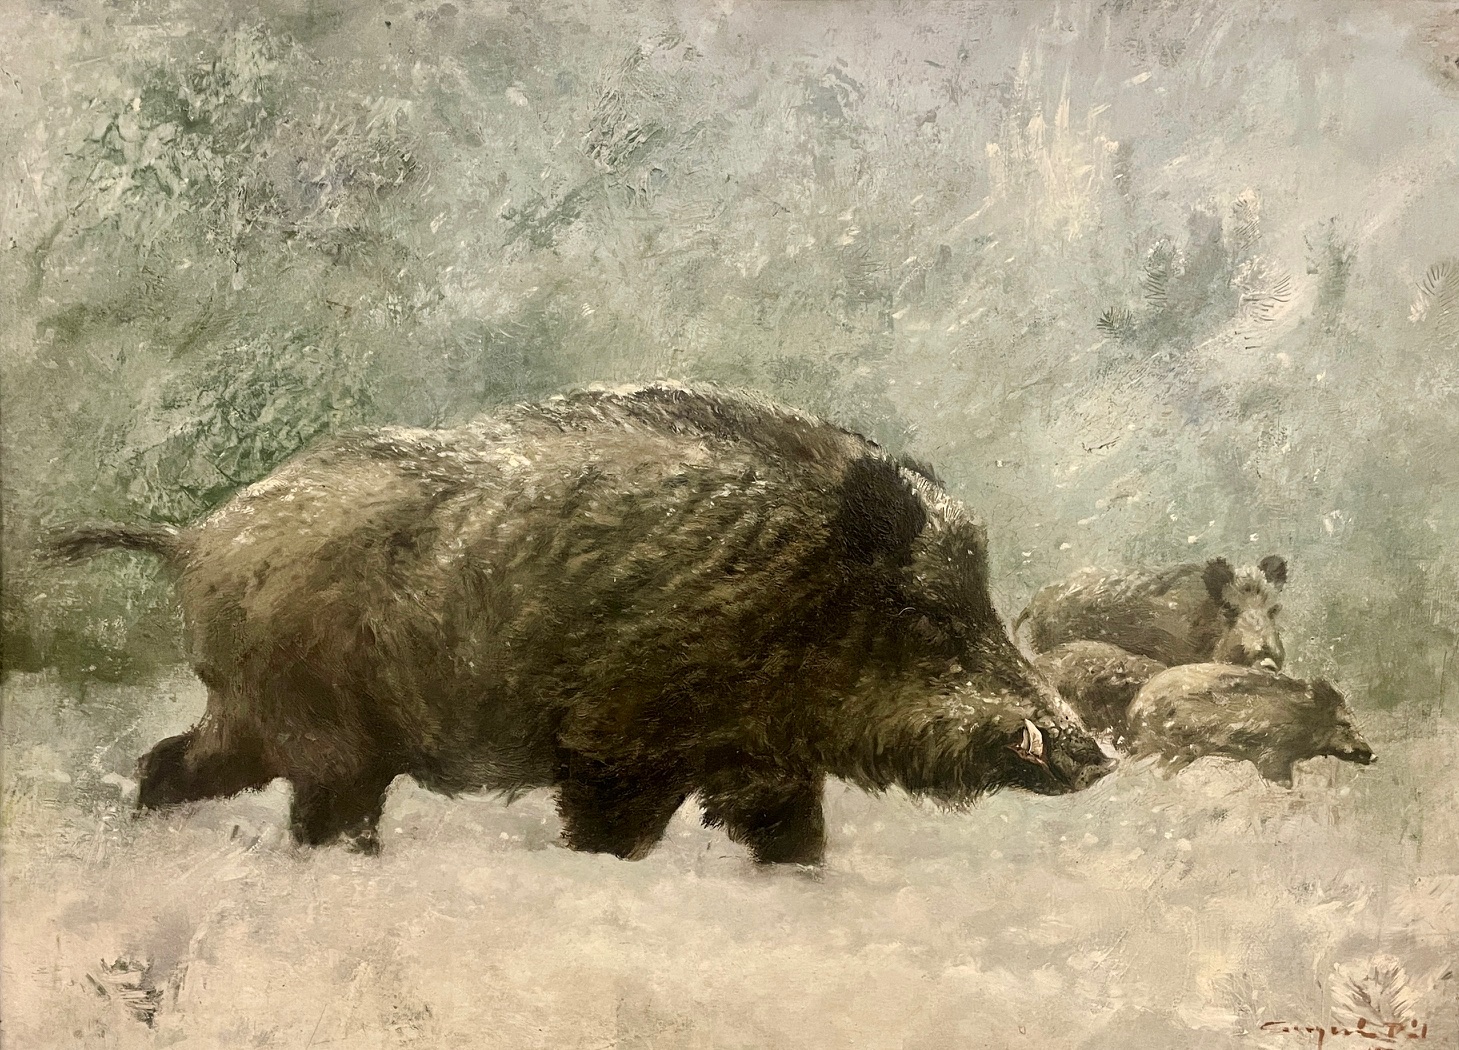 Csergezán, Pál: Wild boars in the snow